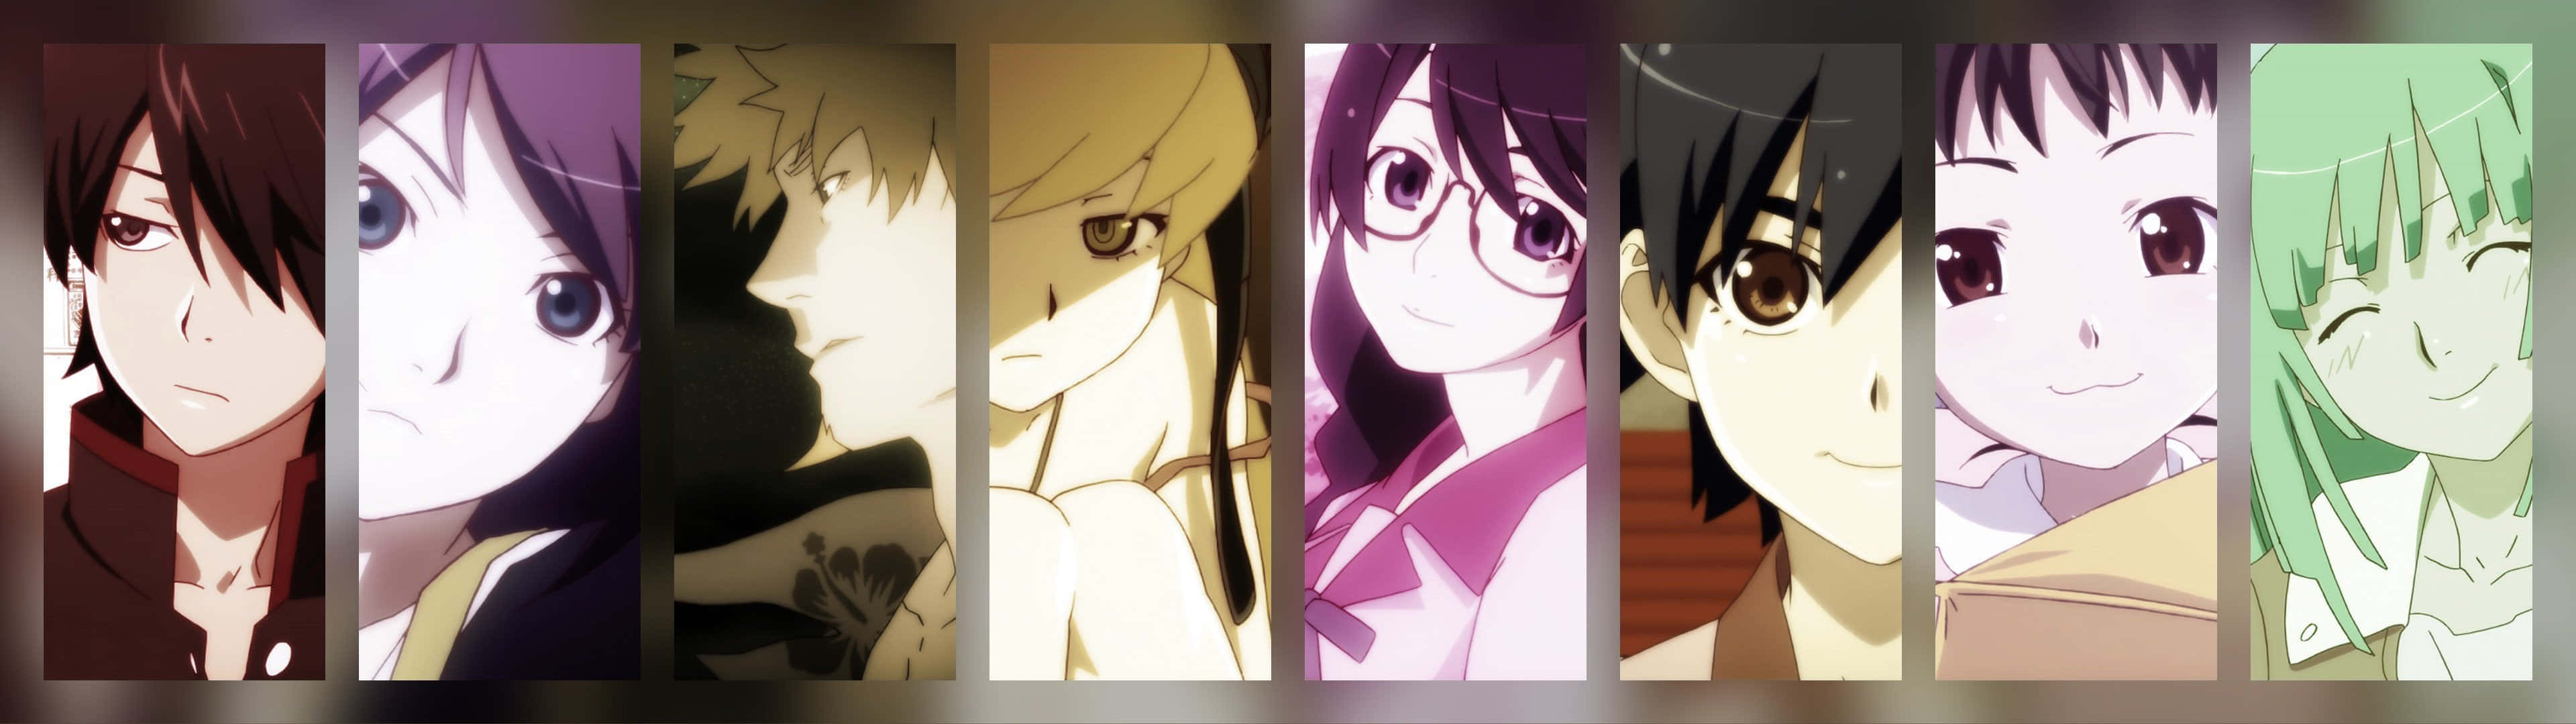 3840x1080 Anime Monogatari Series Characters Picture